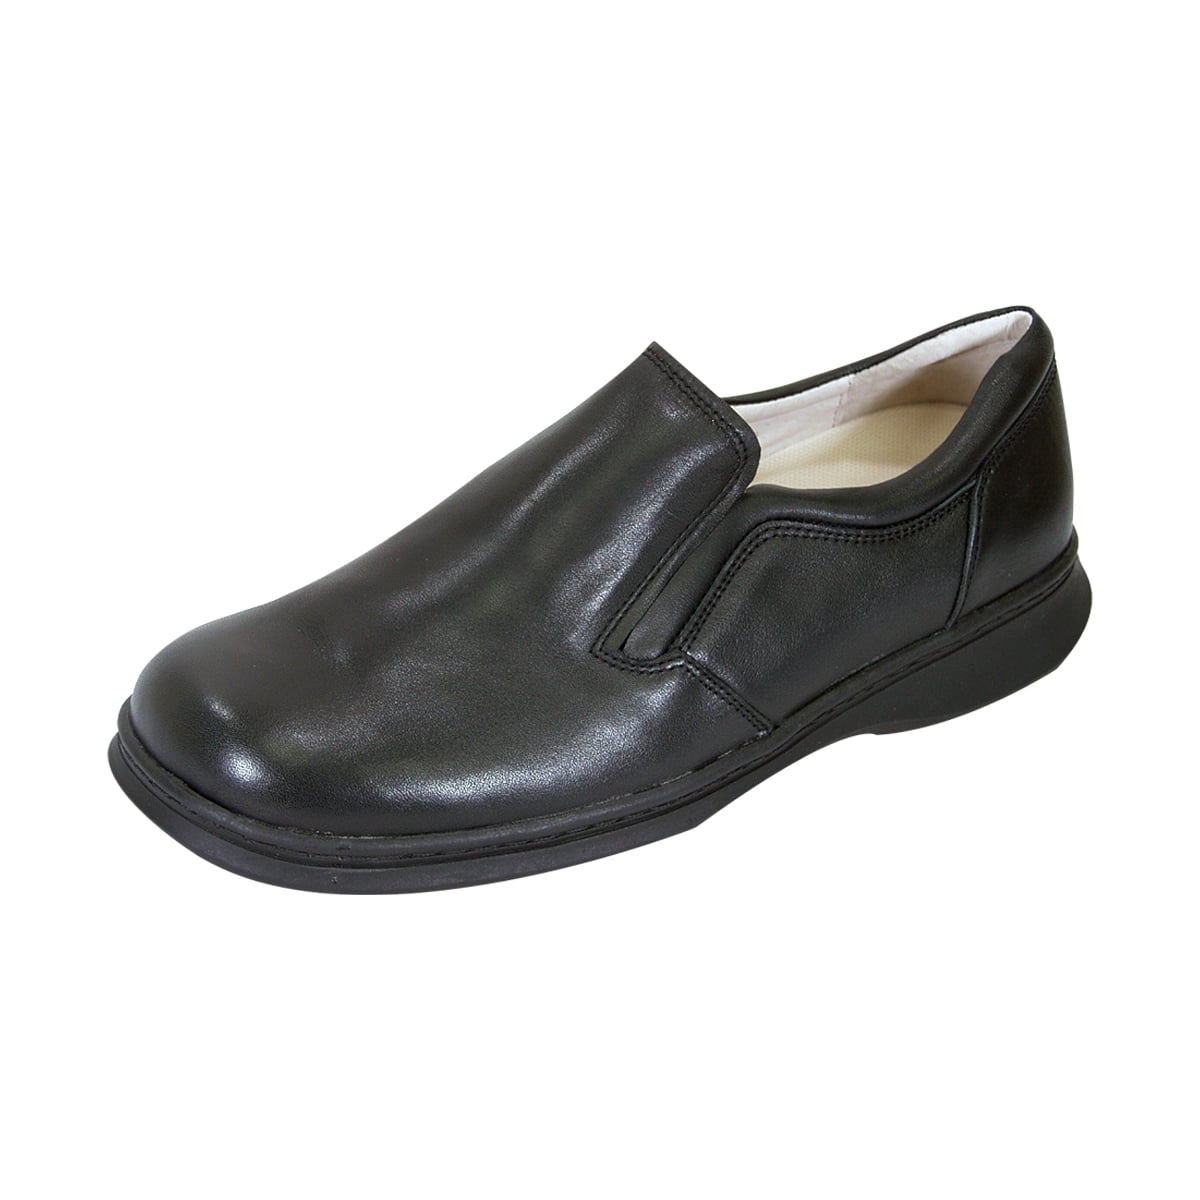 Size/Measurement Guide 24 Hour Comfort  Mike Men Wide Width Leather Step-in Sleek Casual Shoes FootwearUS